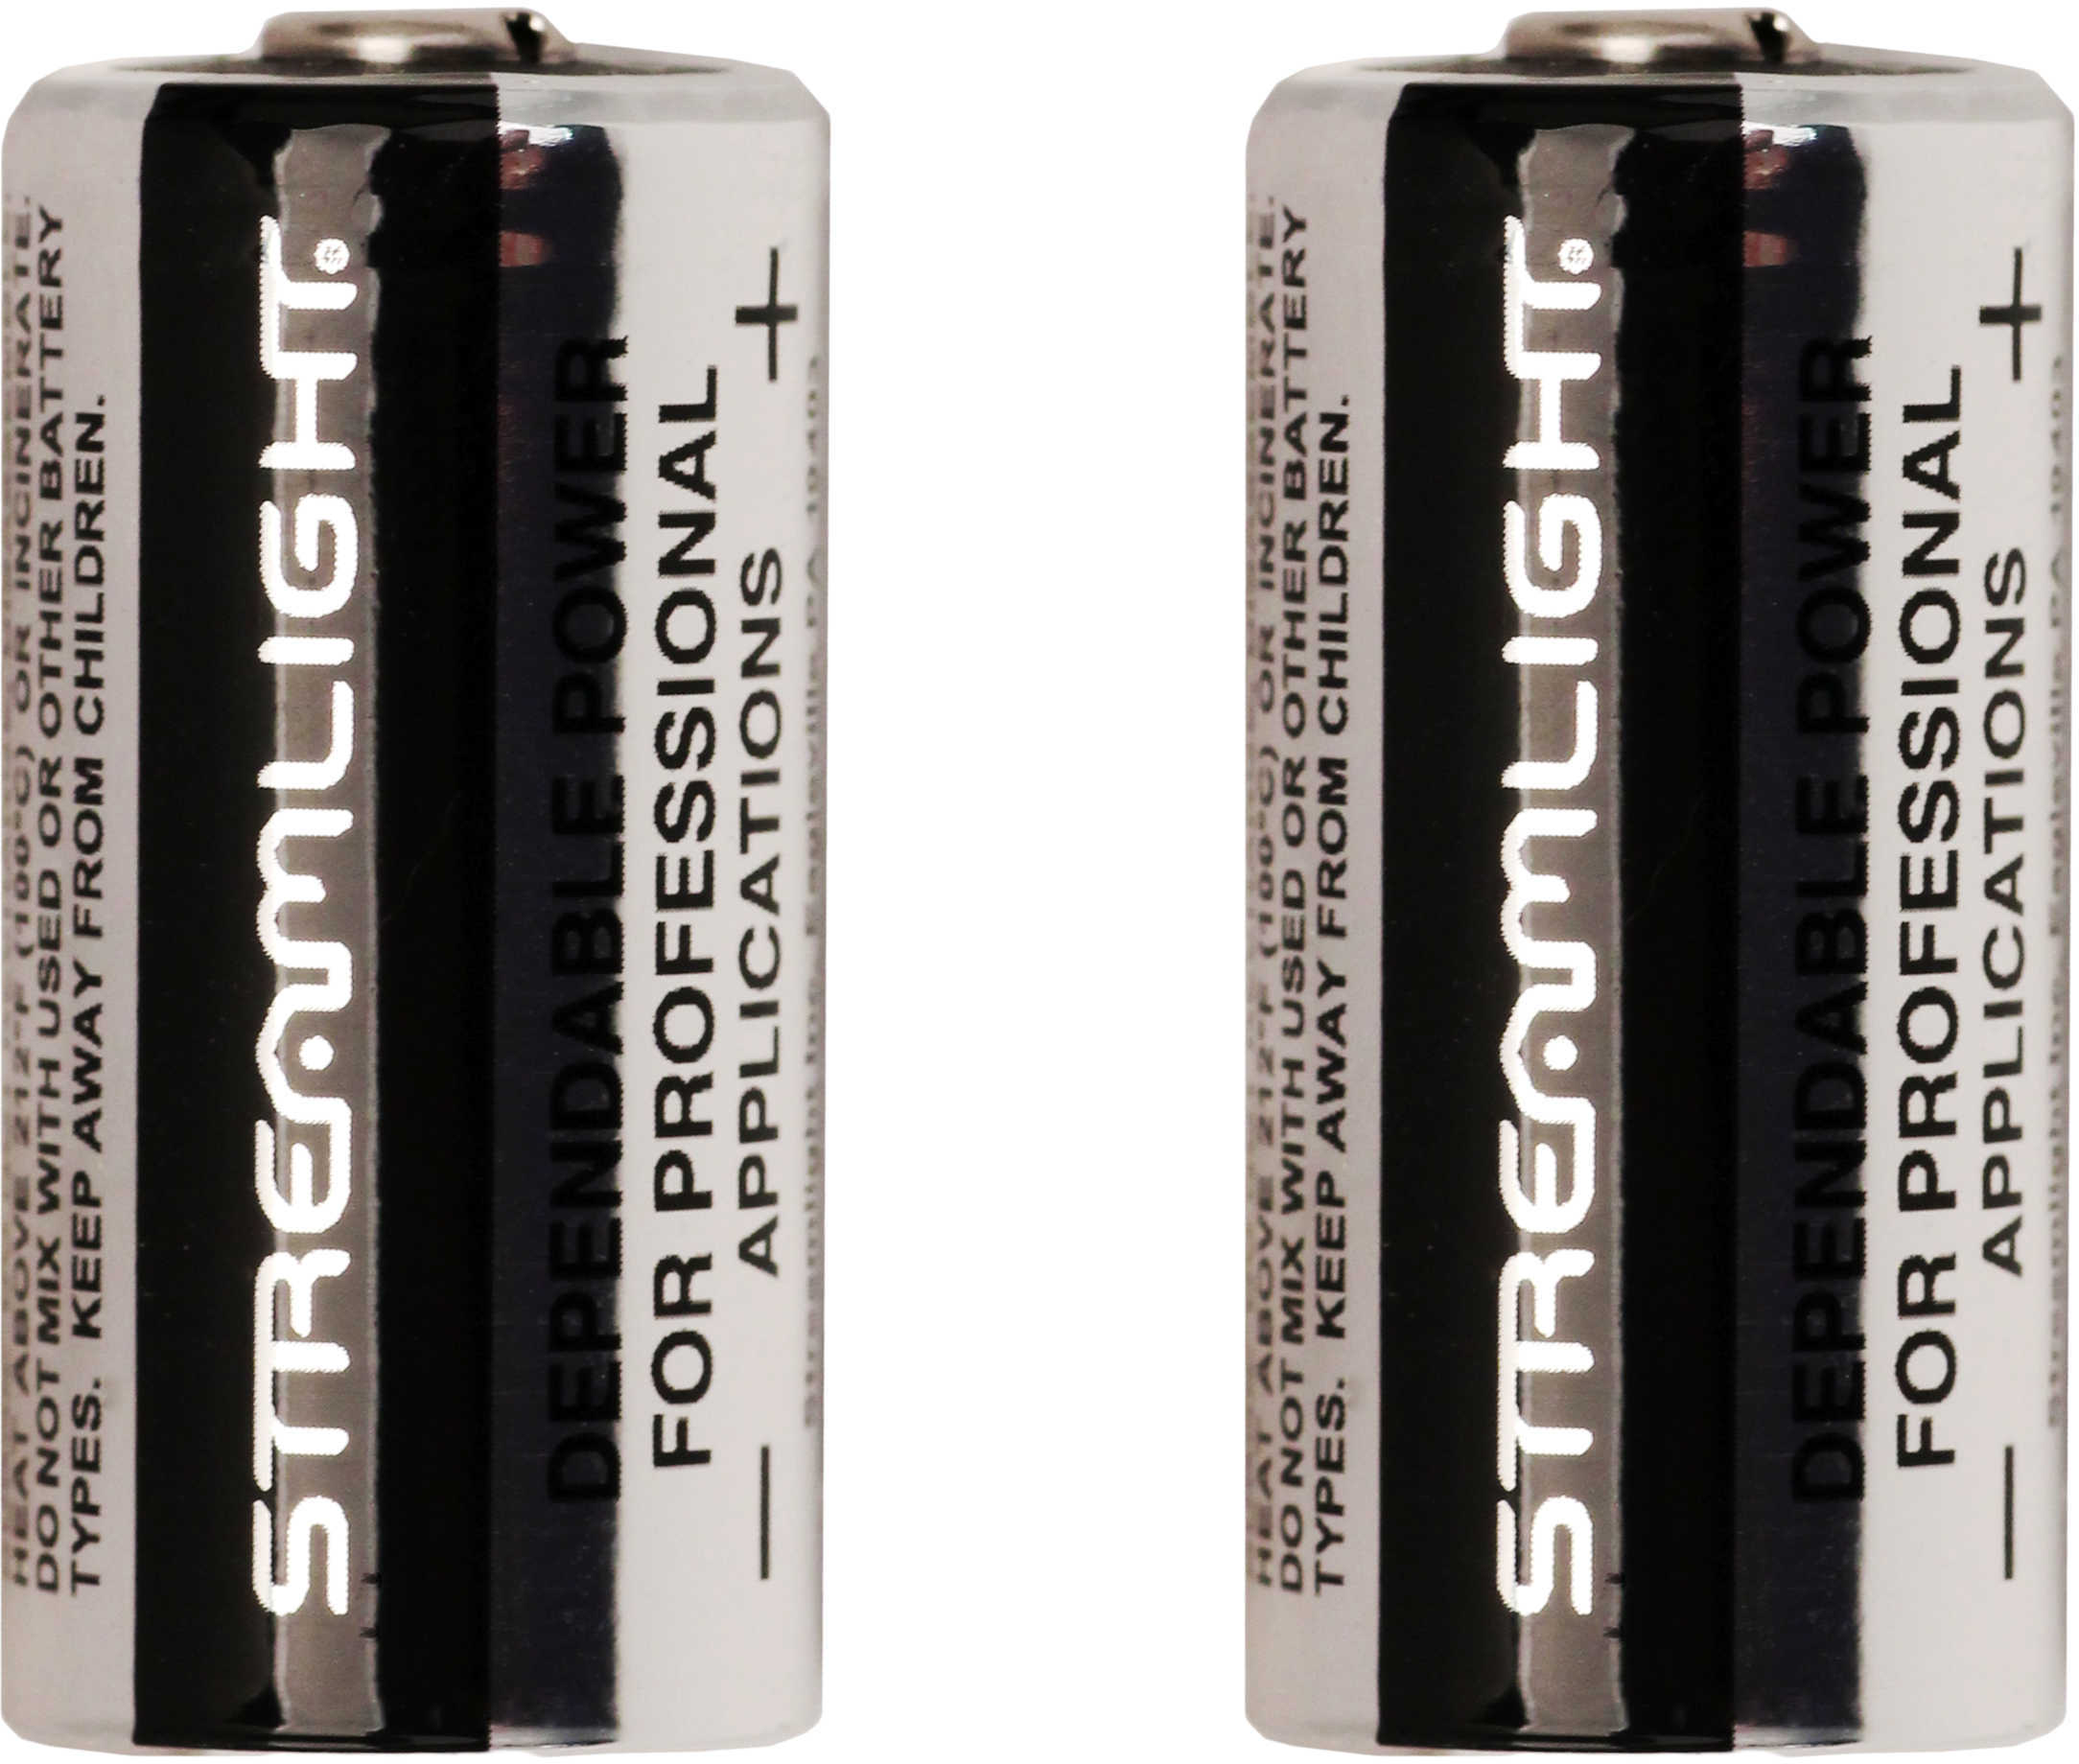 Streamlight Lithium Batteries - 2 Pack